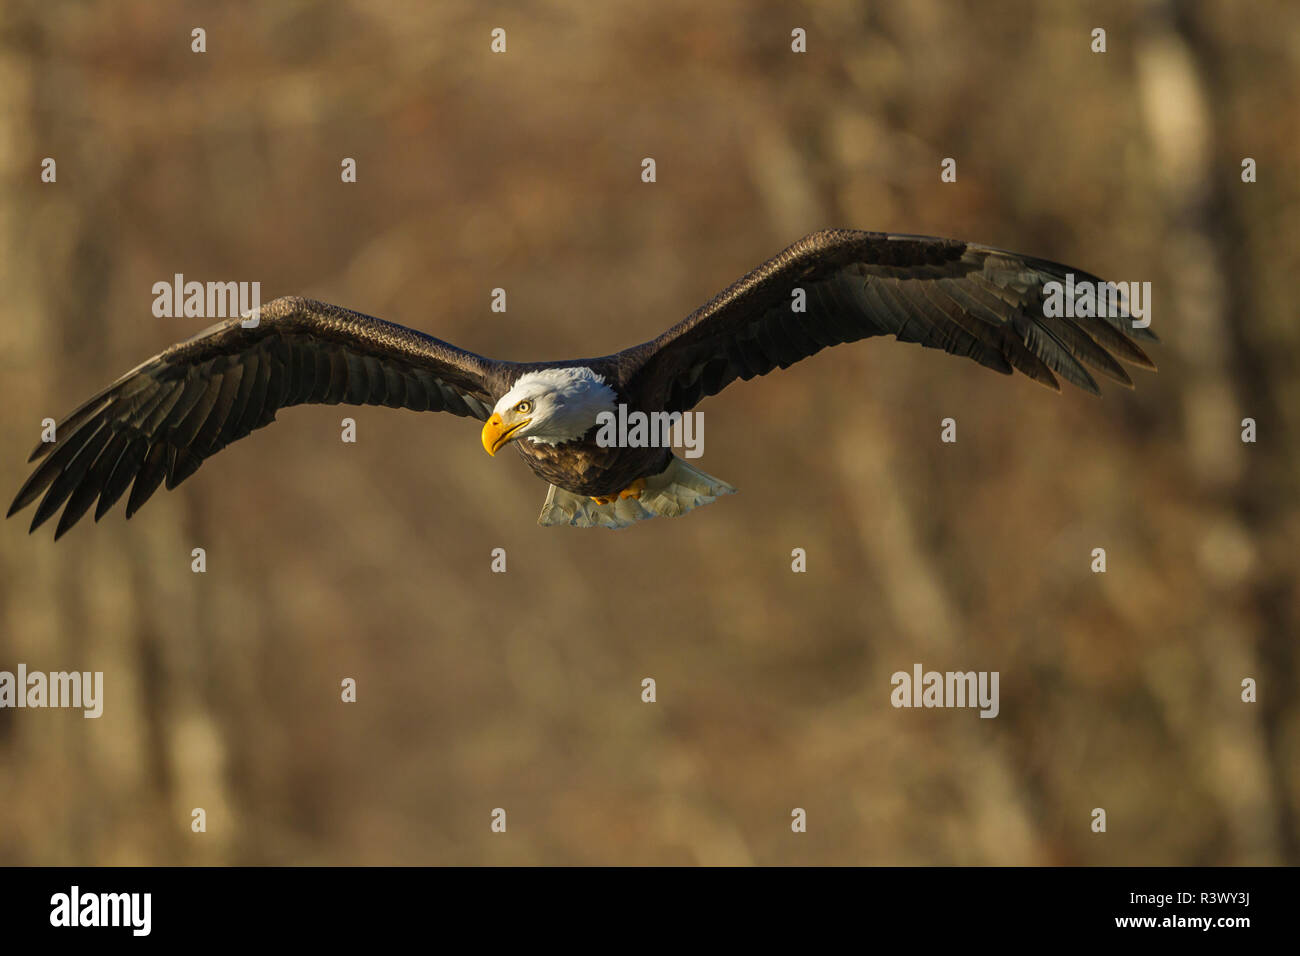 USA, Alaska, Chilkat Bald Eagle Preserve, bald eagle adult flying Stock Photo